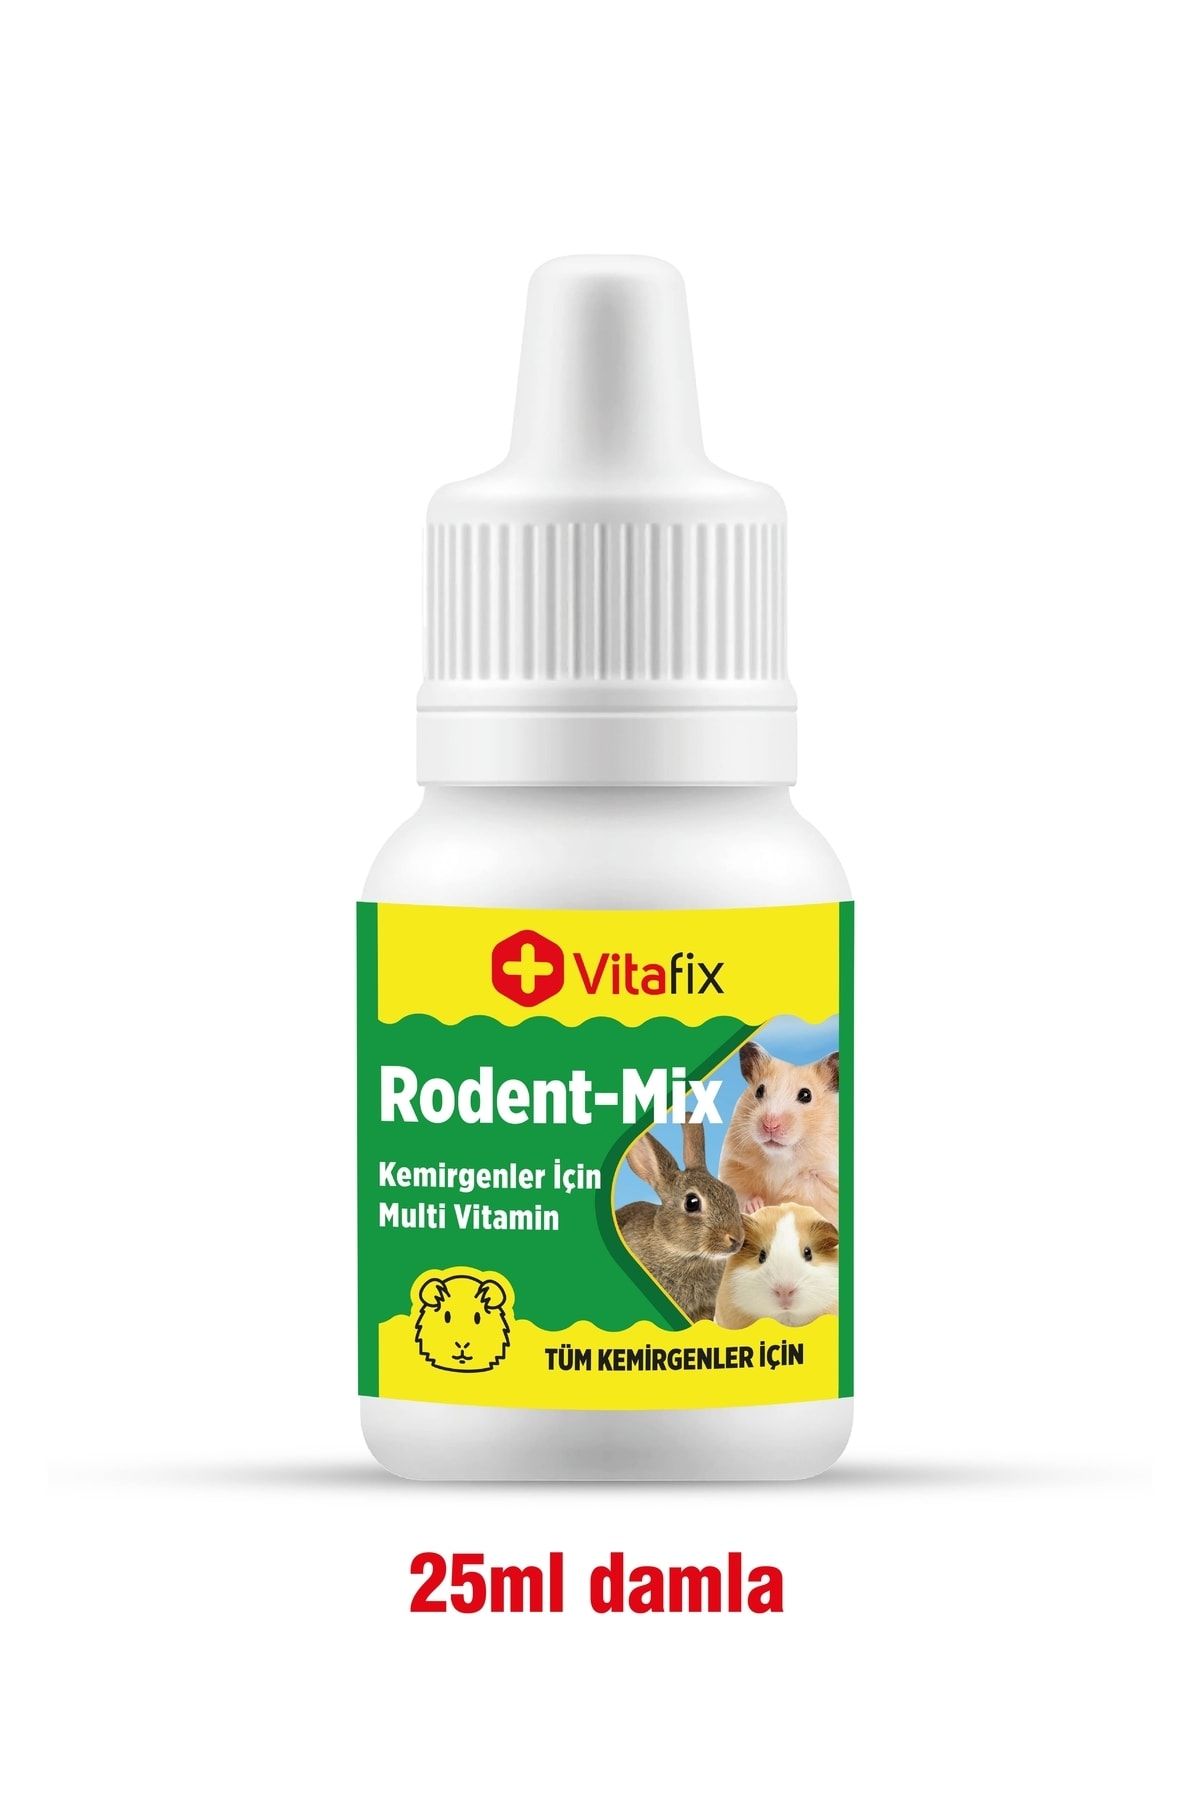 Vitafix Rodent-mix Kemirgenler Için Multi Vitamin, Tavşan Vitamini, Hamster Vitamini, Ginepig Vitamini